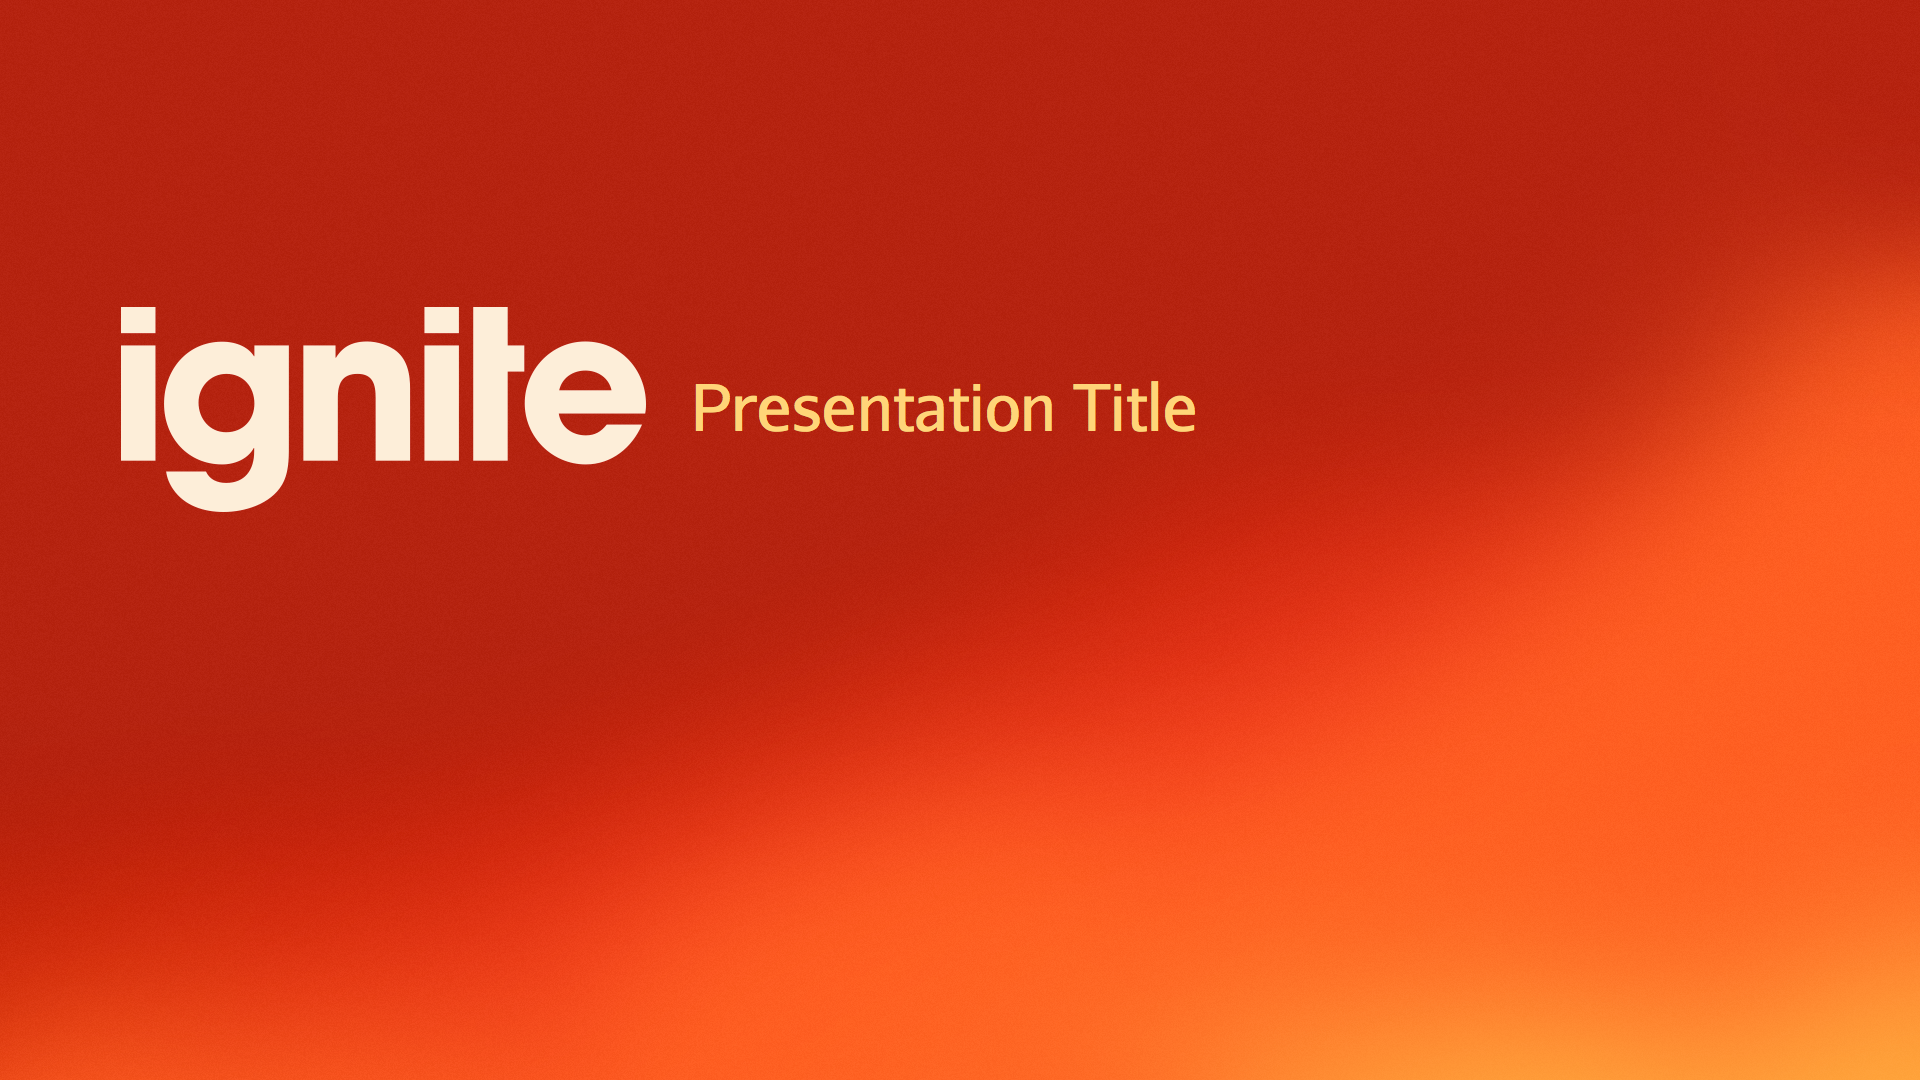 Ignite Keynote Presentation Template by furnace GraphicRiver